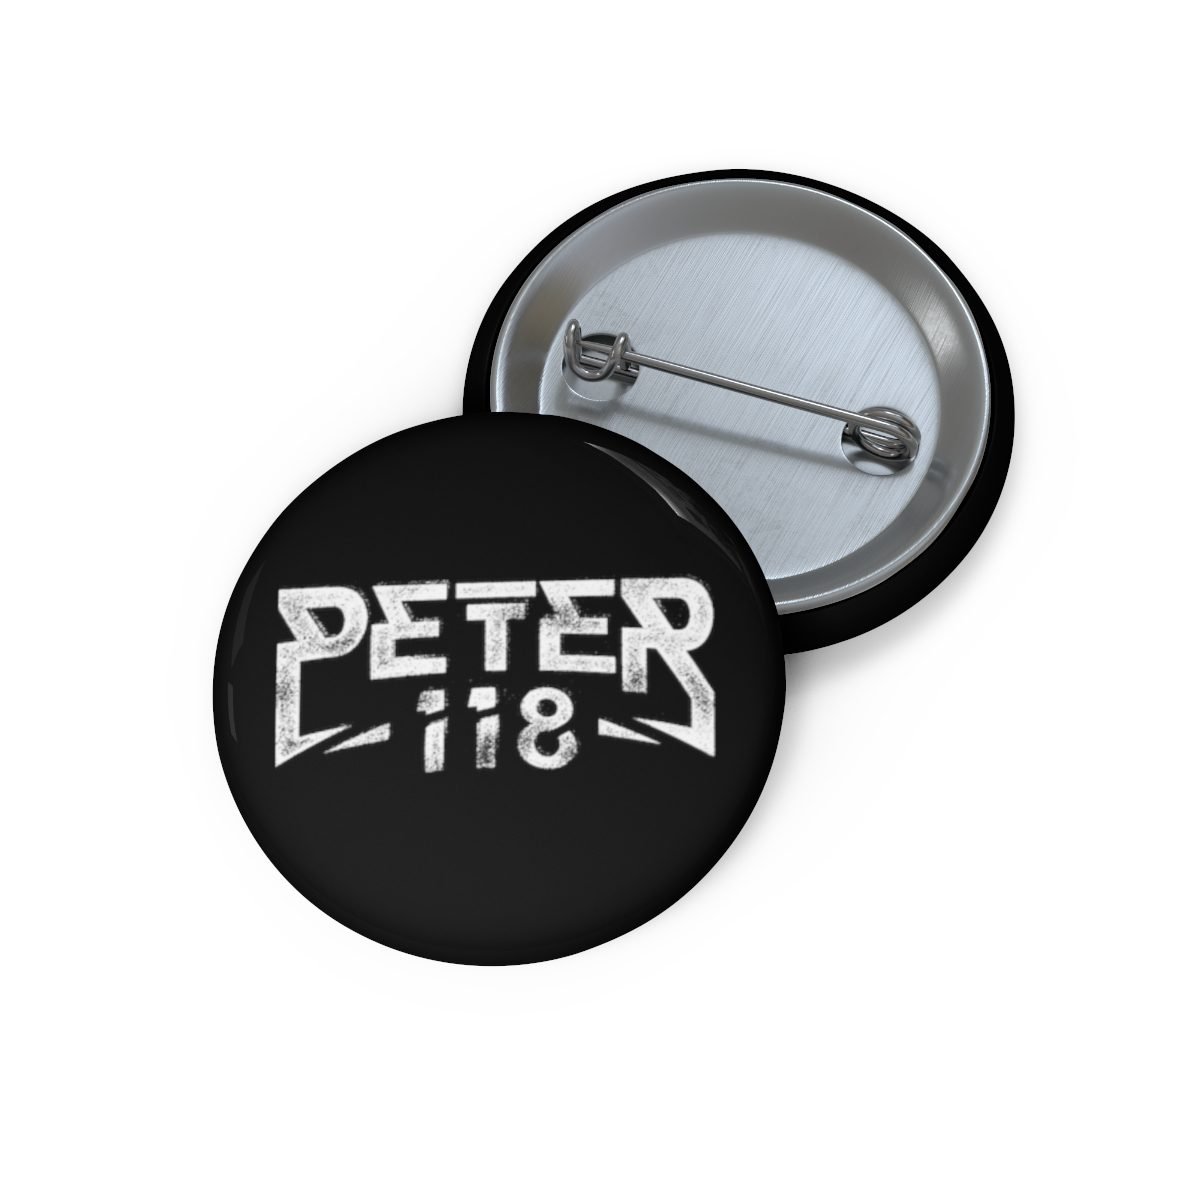 Peter118 Logo Pin Buttons